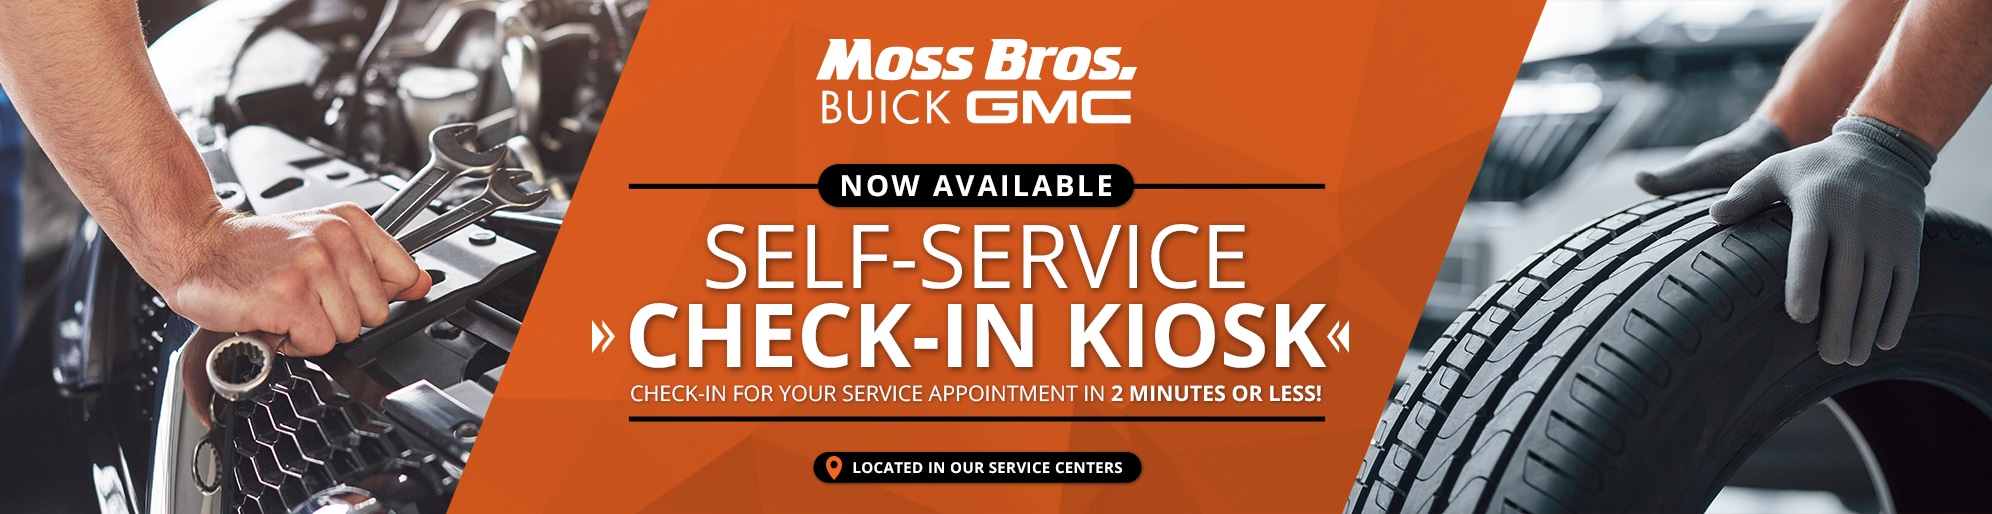 Moss Bros. Buick GMC Schedule Service